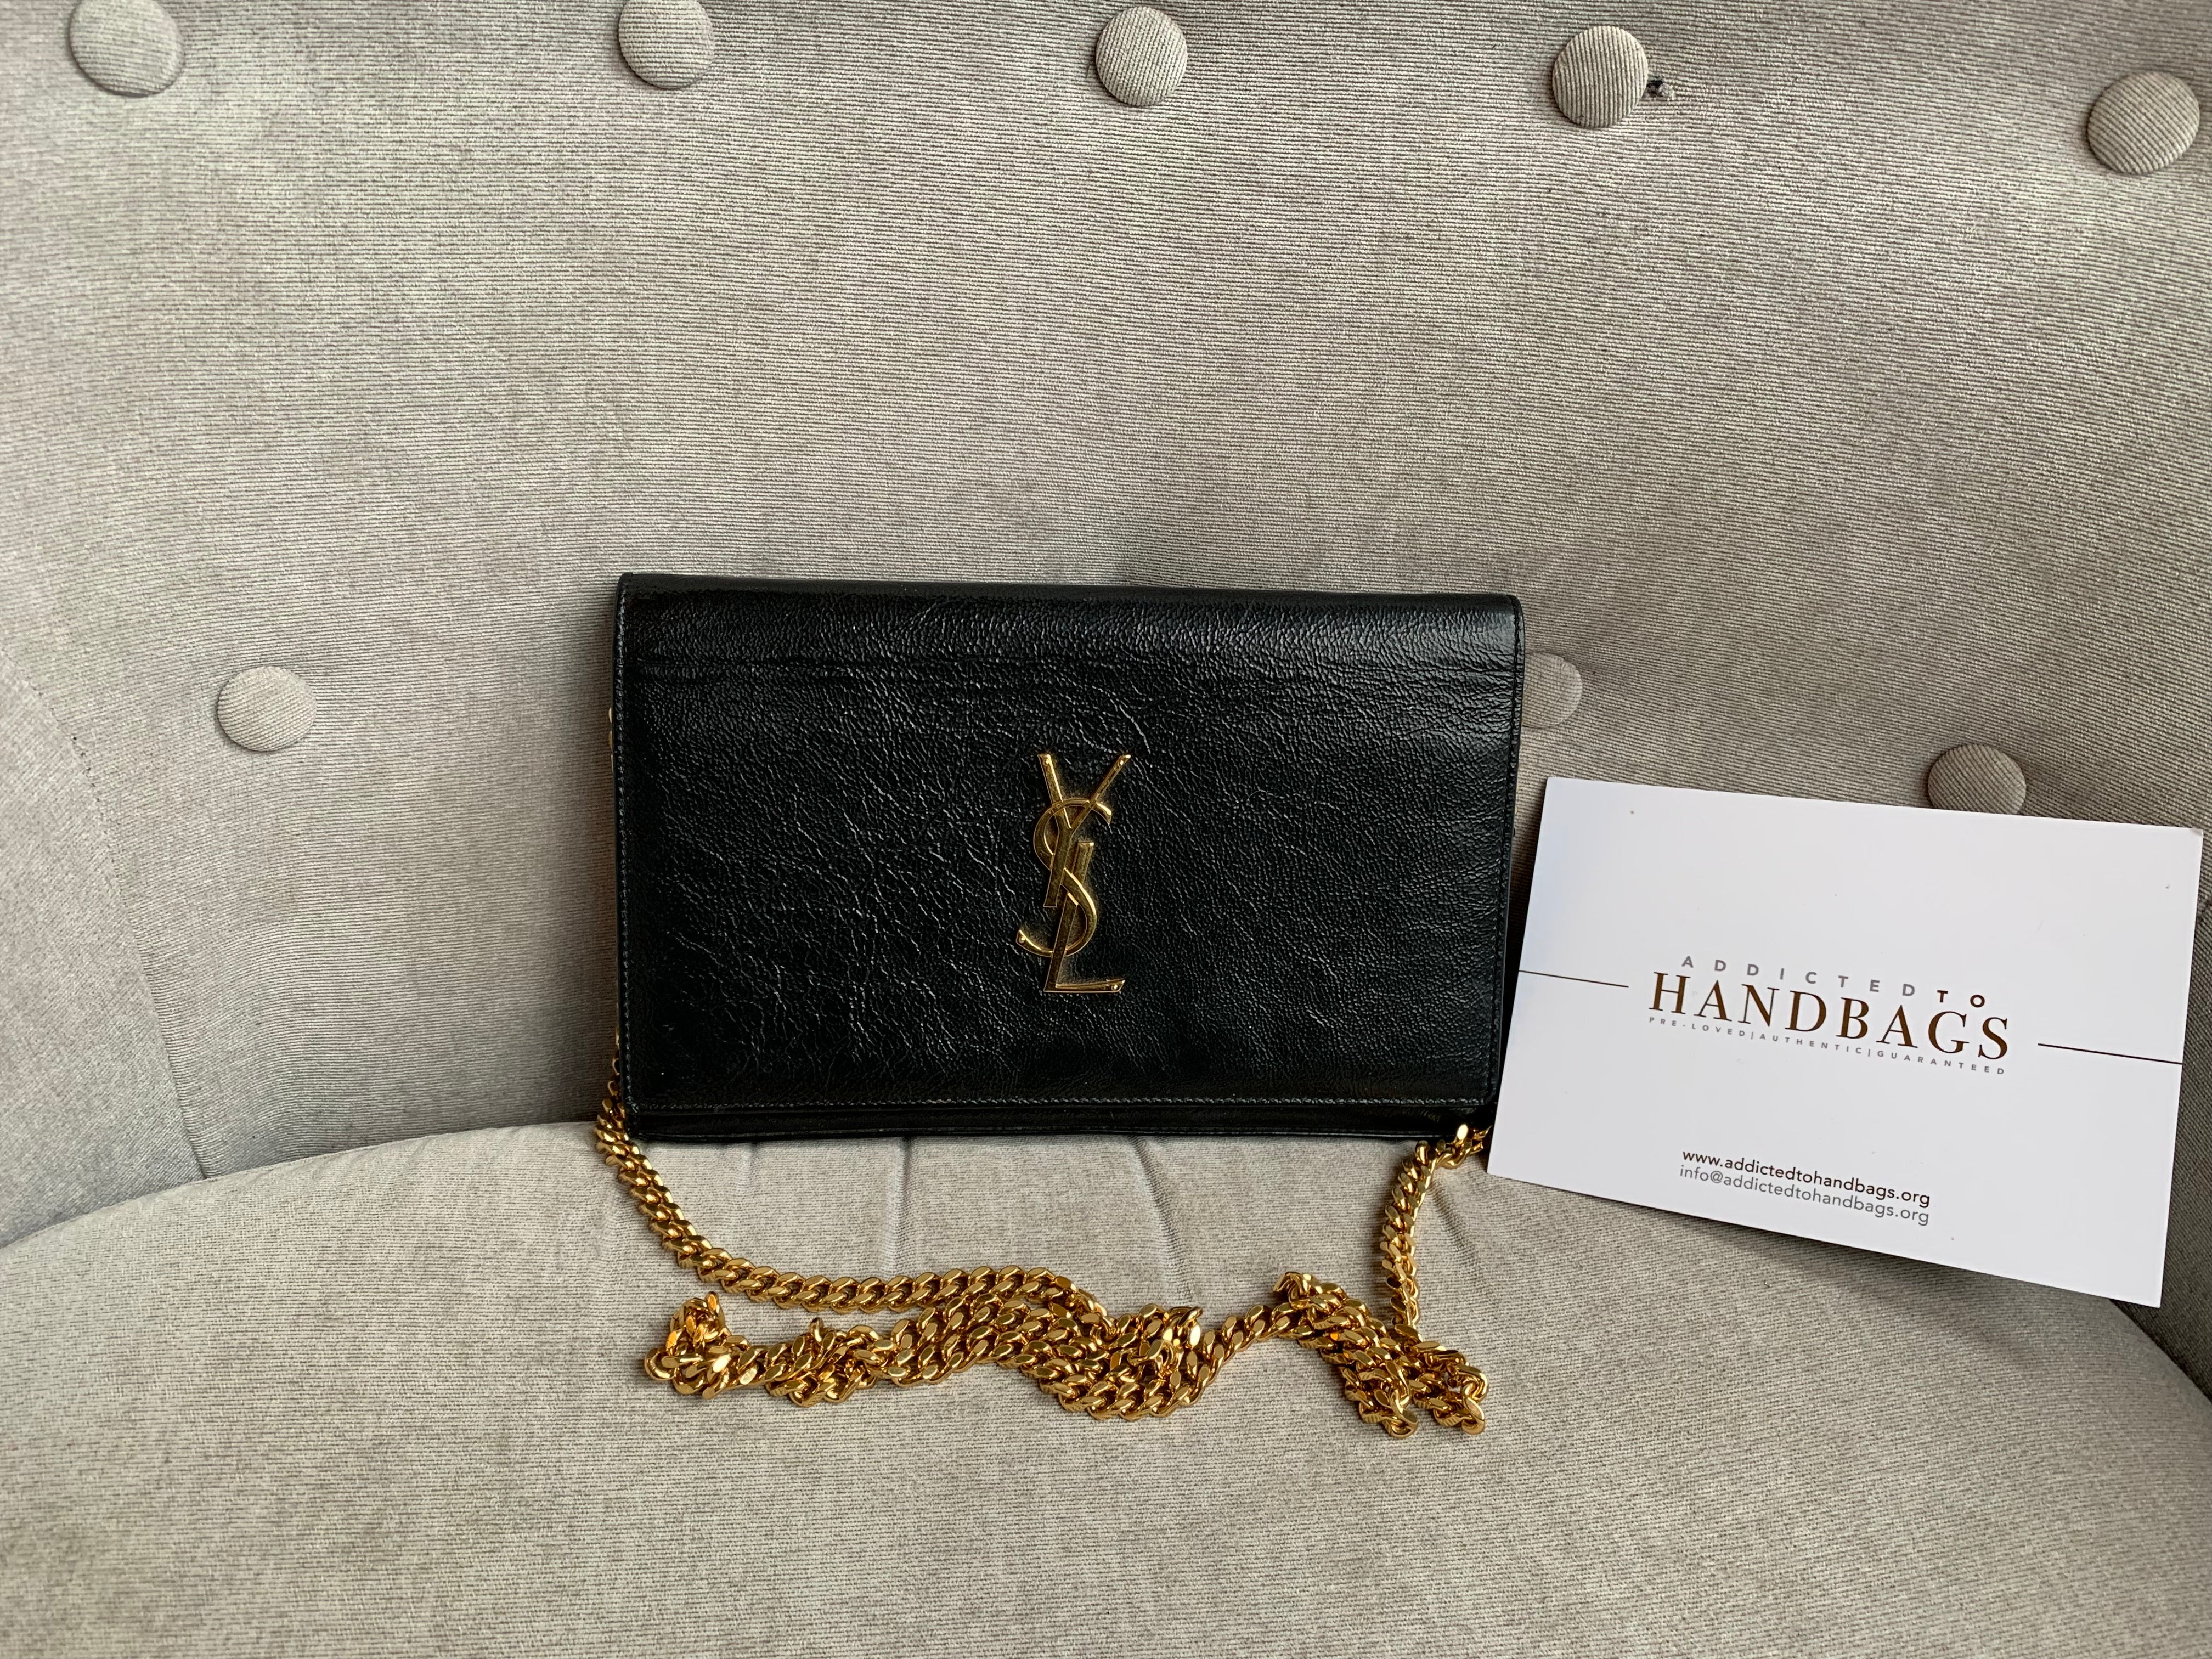 Yves Saint Laurent, Bags, Ysl Wallet On Chain